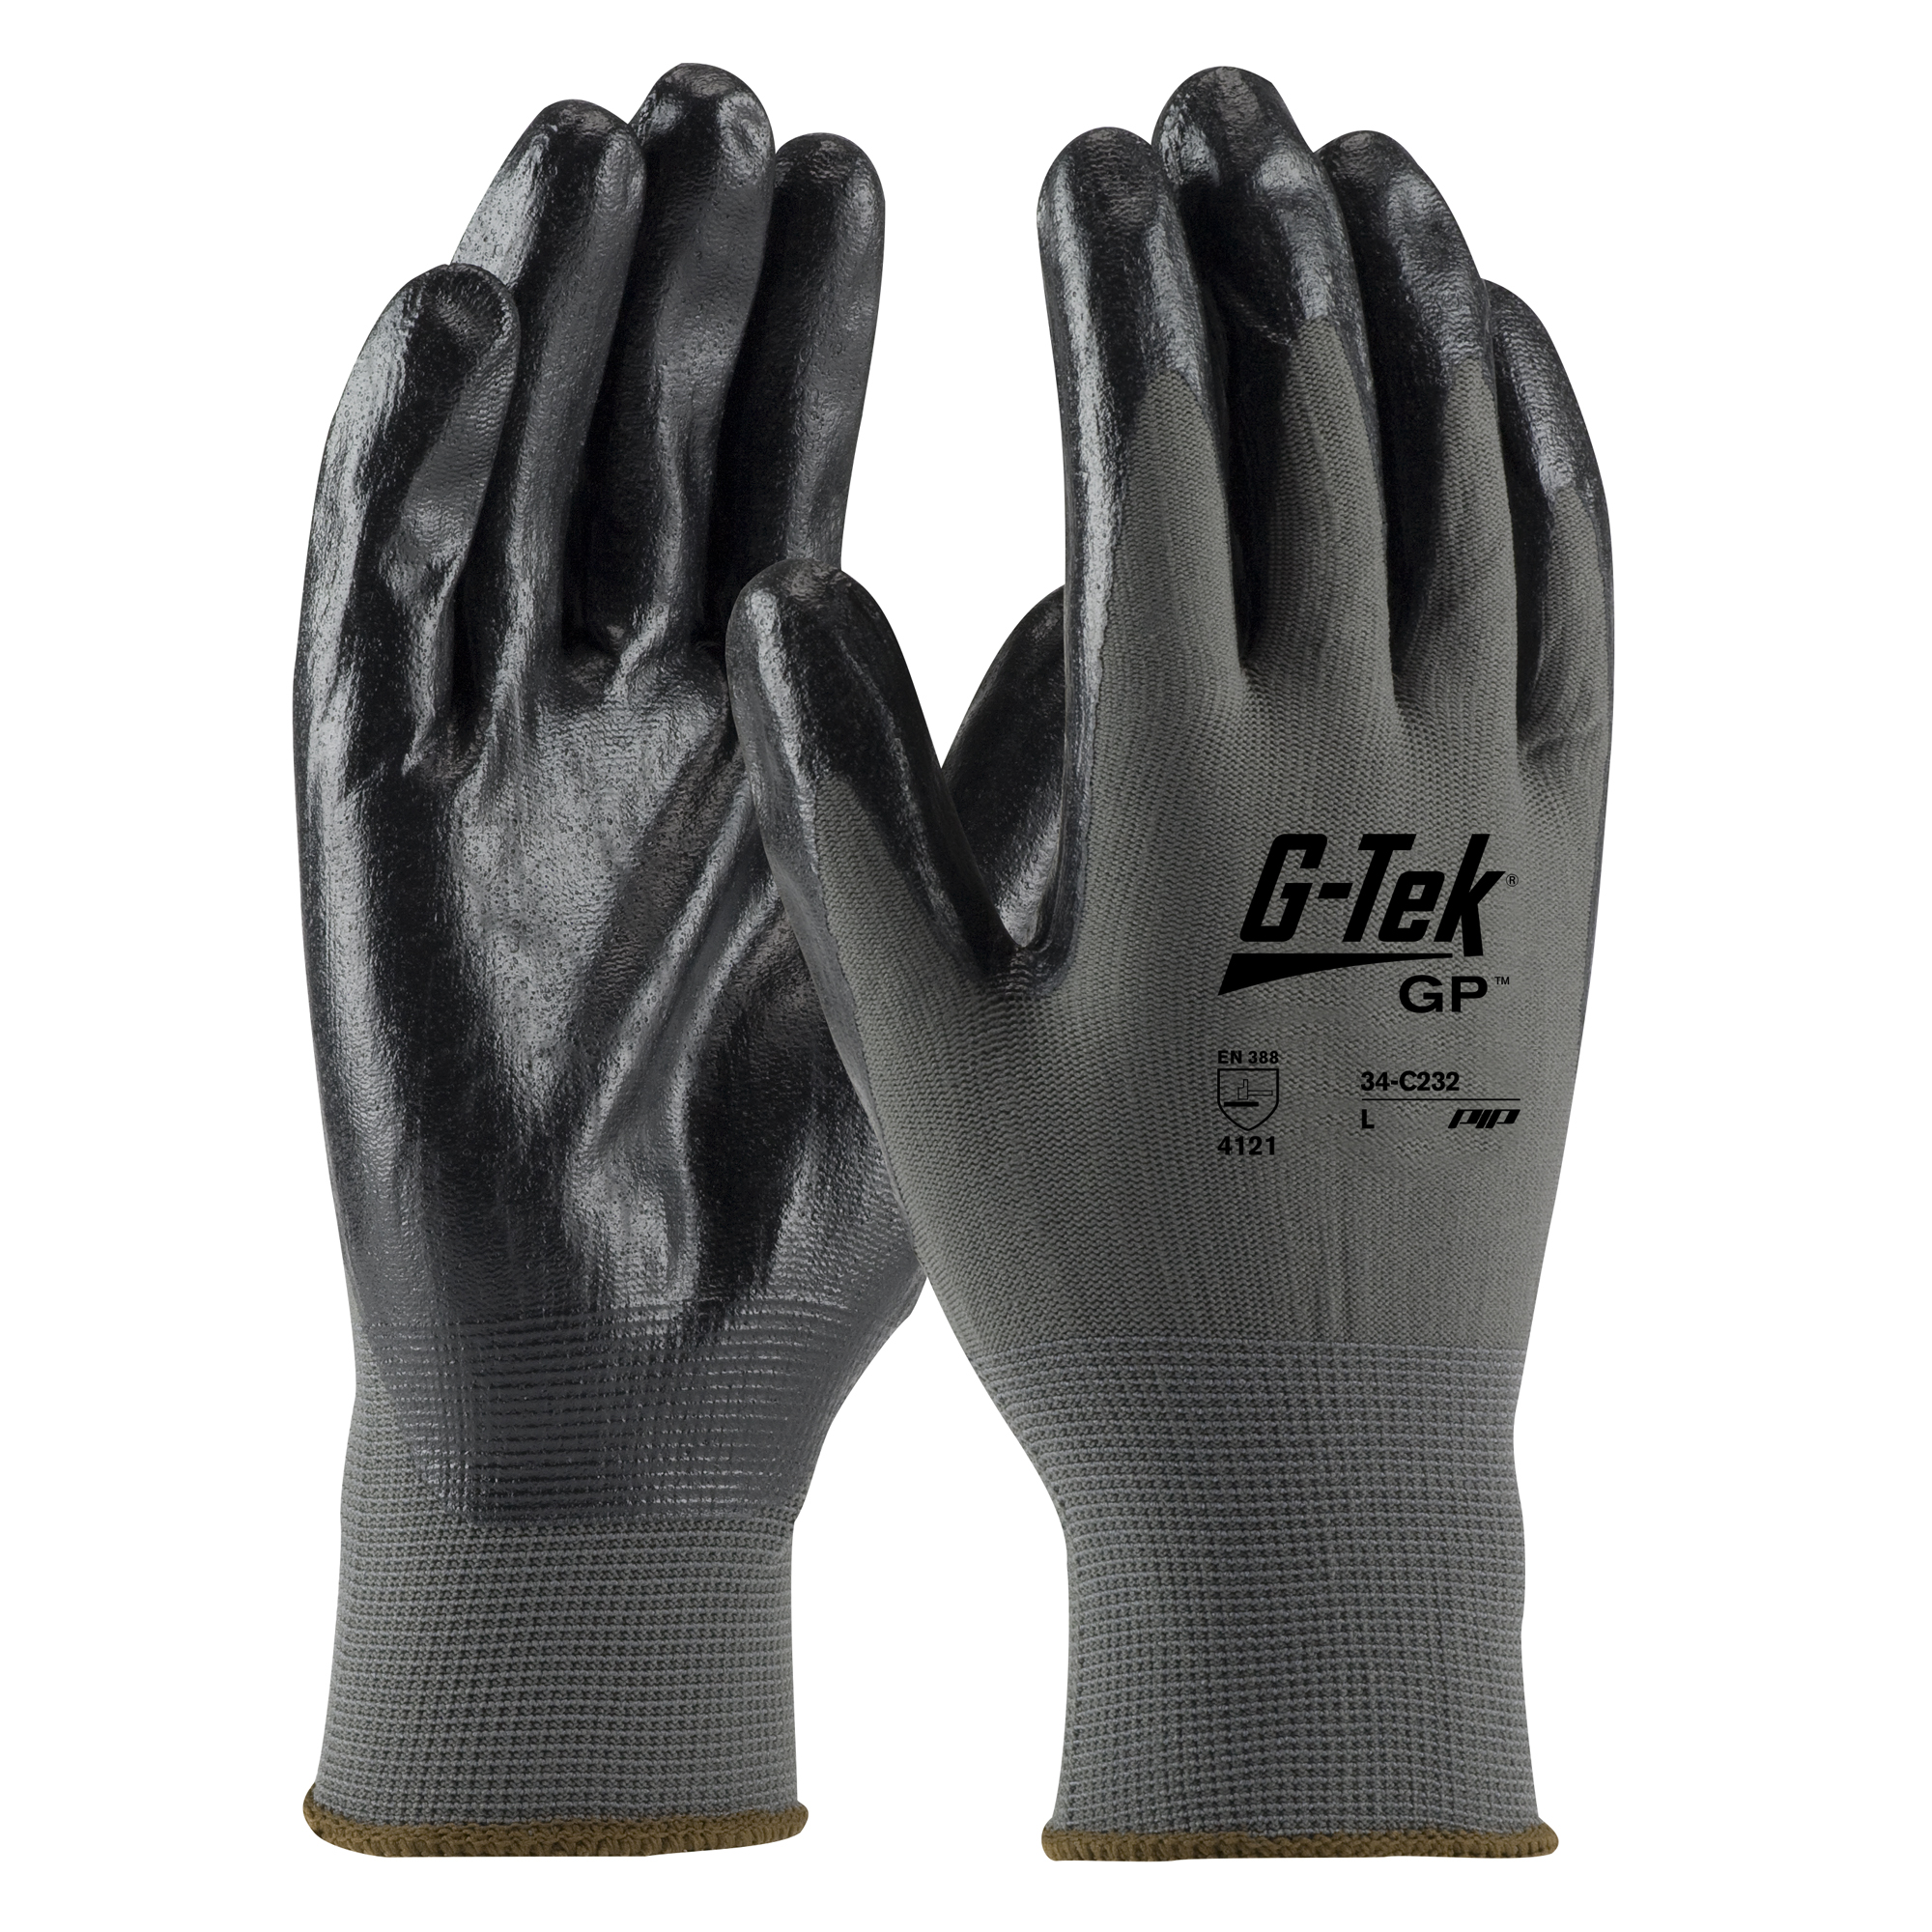 Airgas - RAD64056912 - RADNOR™ Medium 13 Gauge DuPont™ Kevlar® And LYCRA®  Cut Resistant Gloves With Nitrile Coated Palm & Fingers